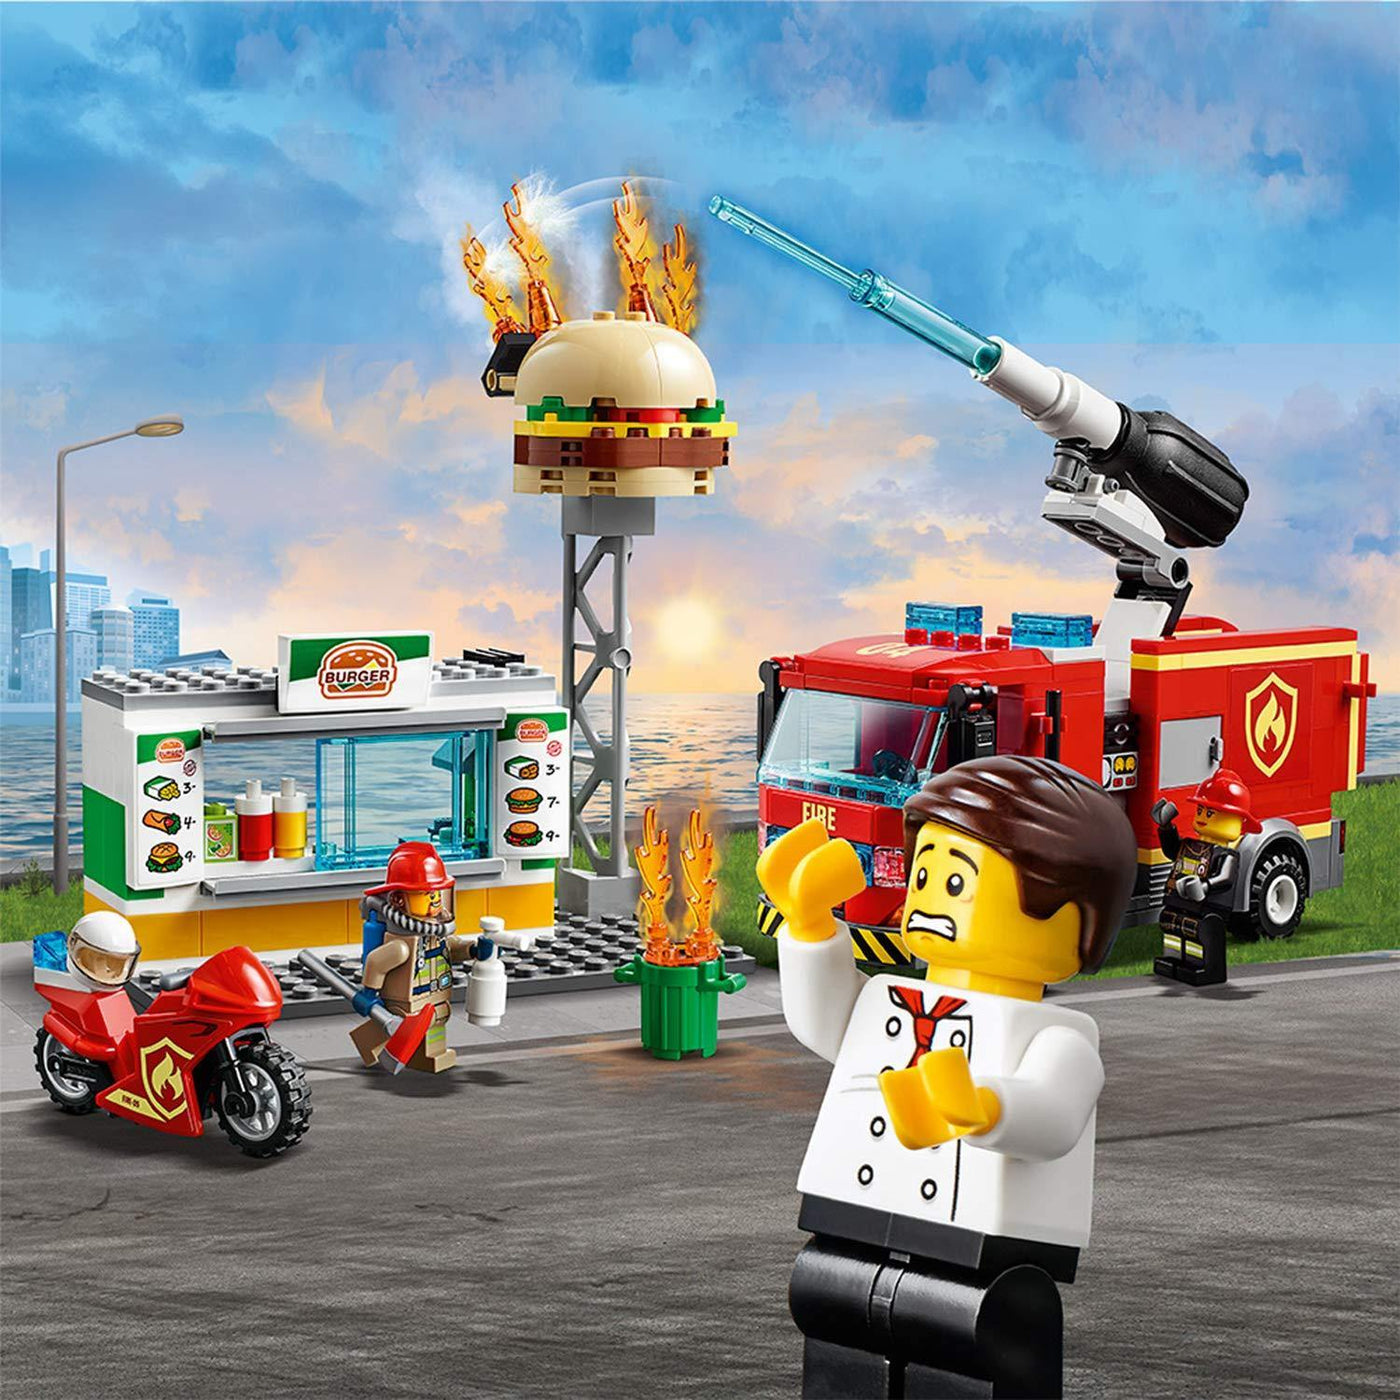 Burger Bar Fire Rescue, 60214 | LEGO® City - Krazy Caterpillar 